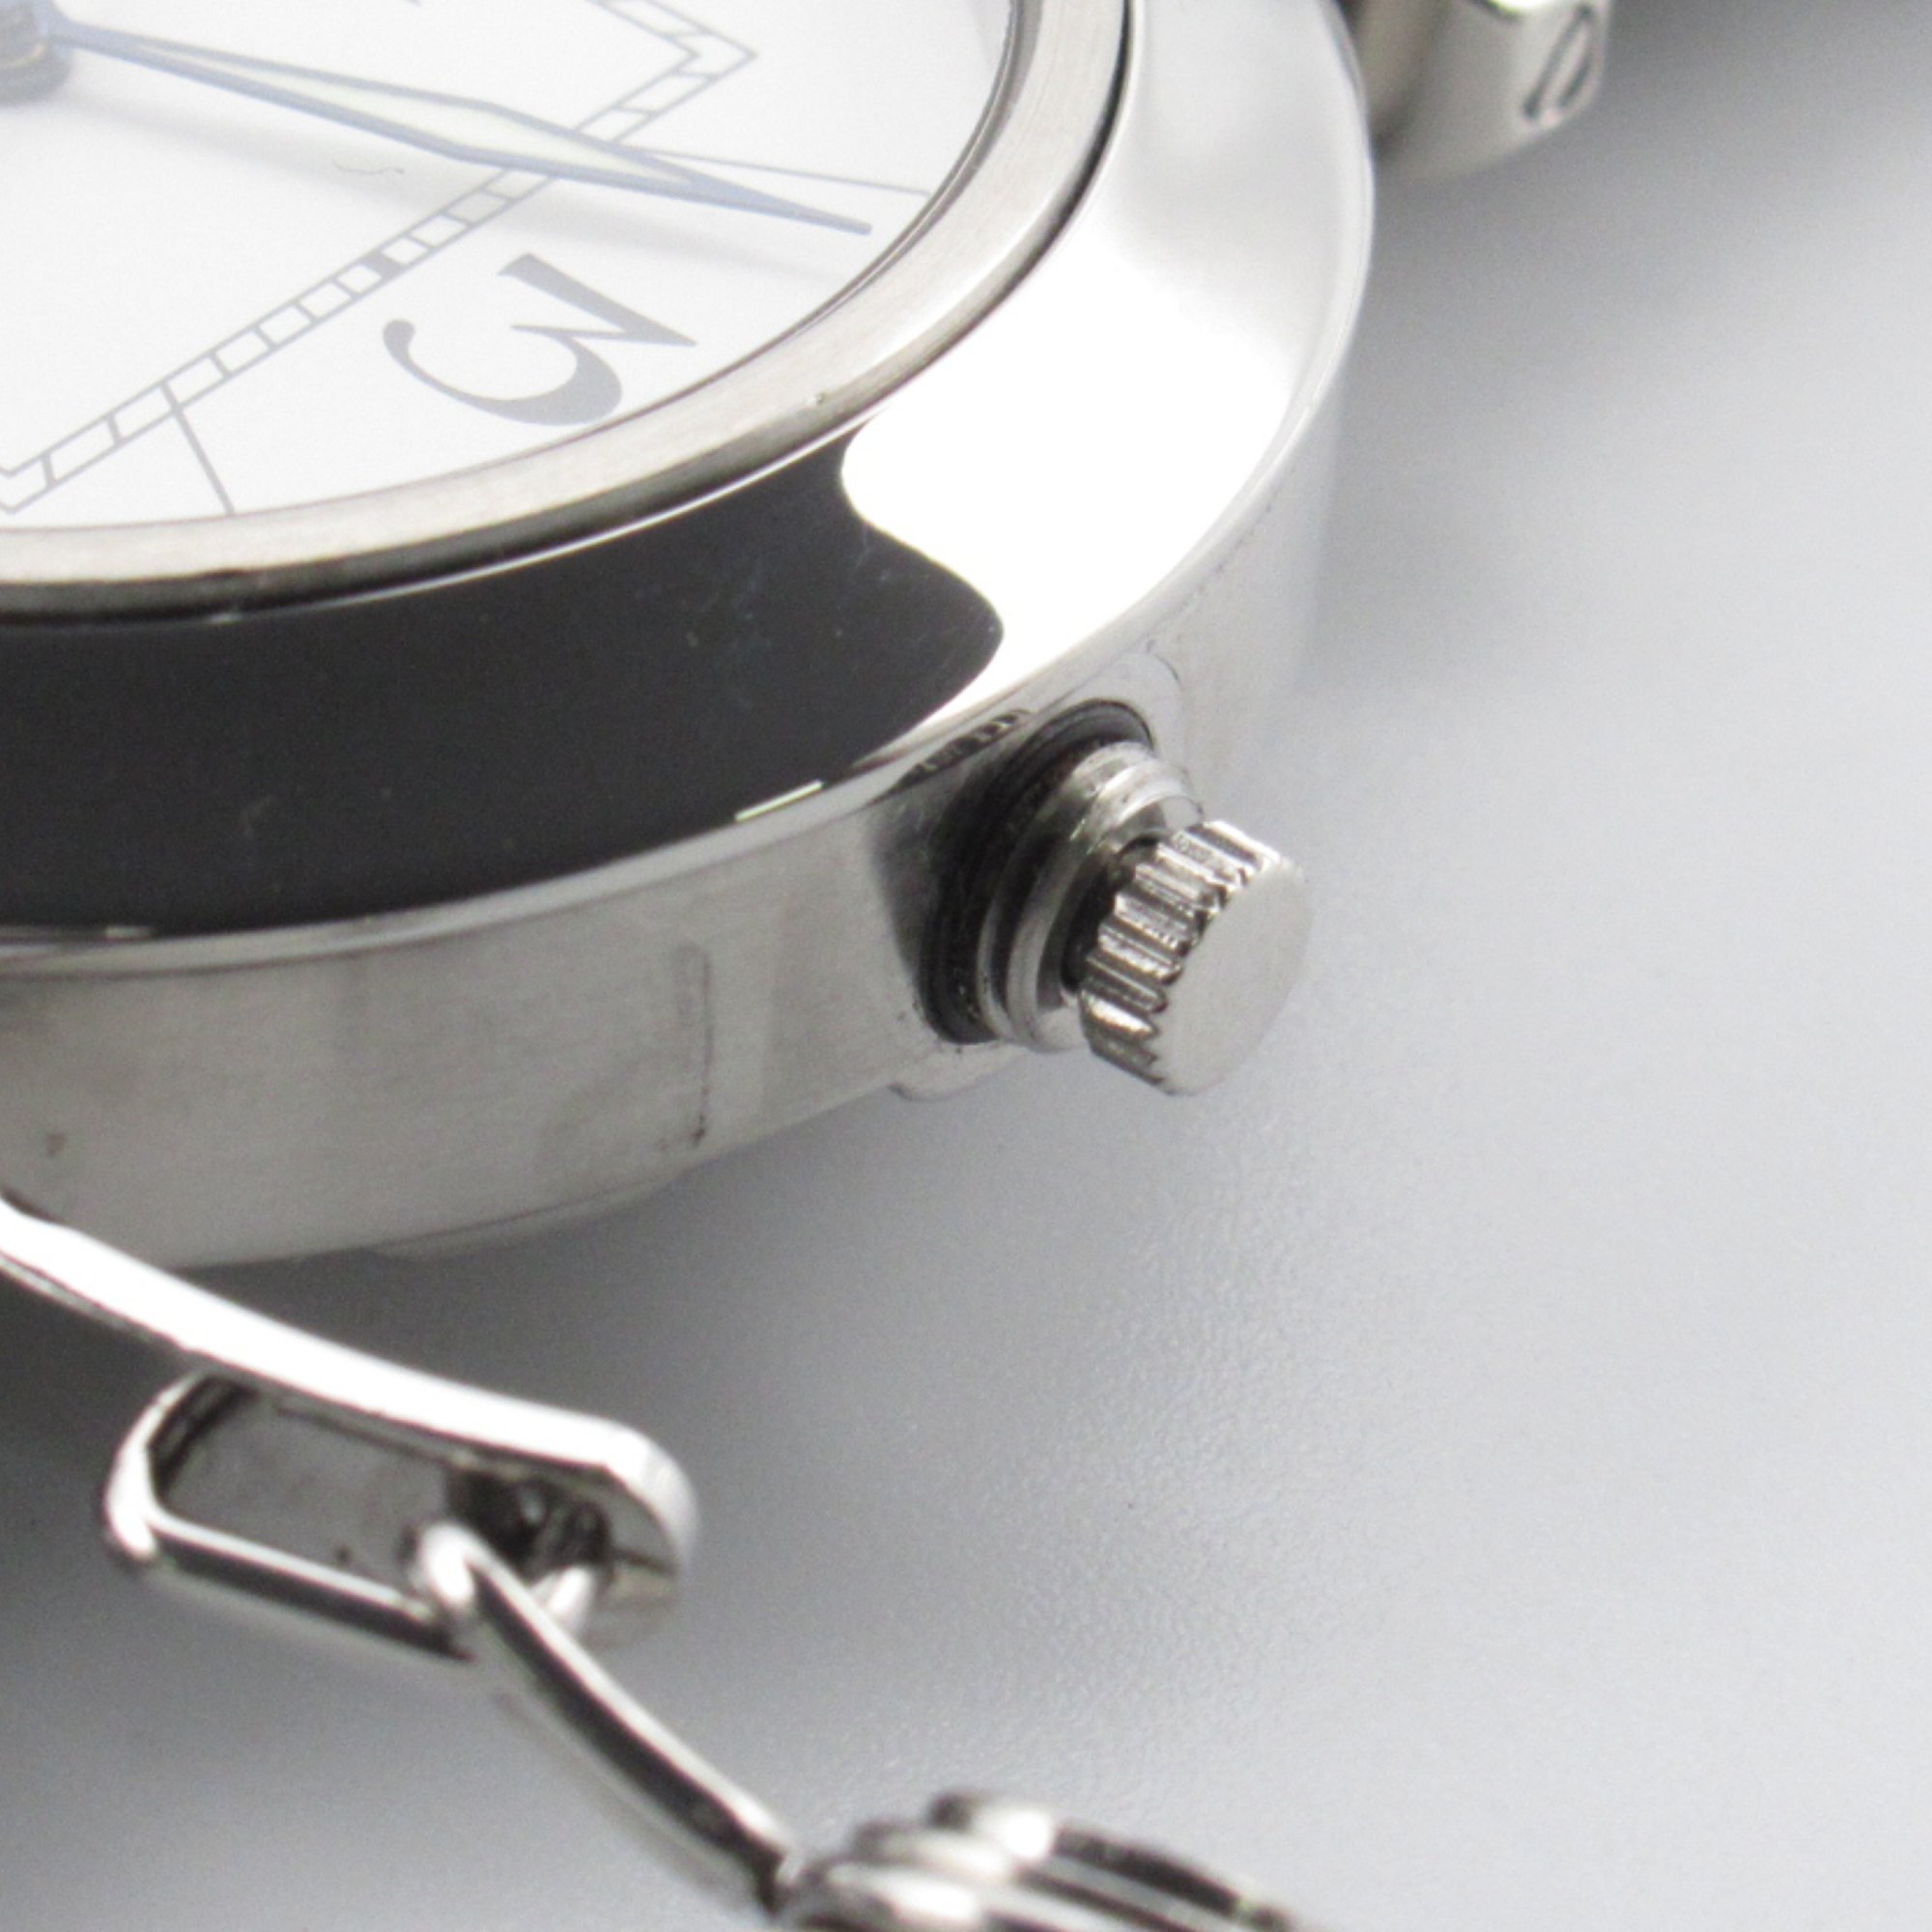 CARTIER Pasha C Big Date Wrist Watch W31055M7 Mechanical Automatic White  Stainless Steel W31055M7